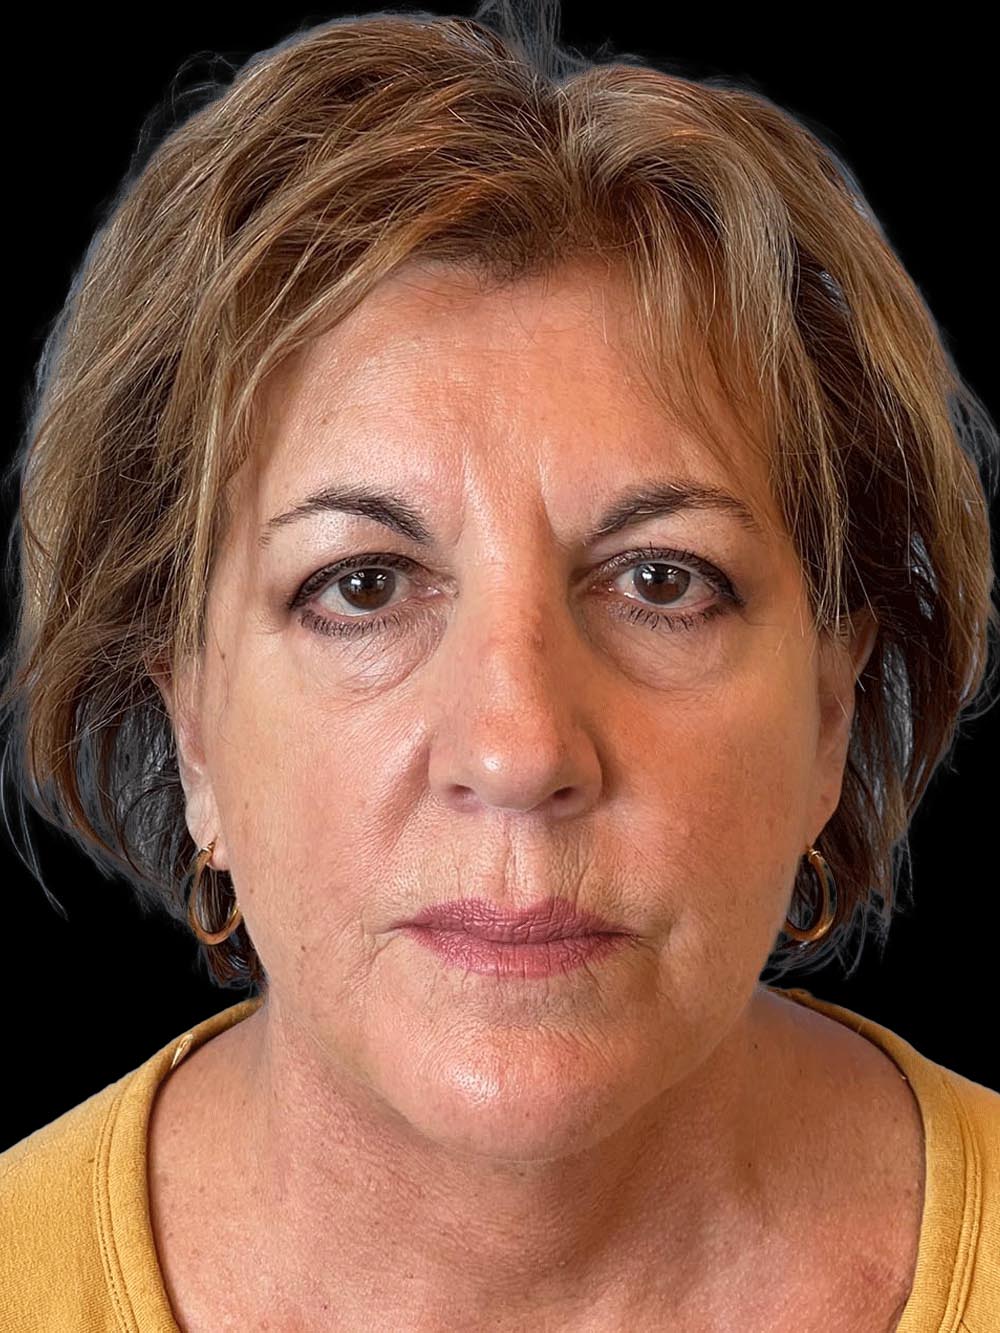 Photo of the patient’s face after the Facelift surgery. Patient 4 - Set 1